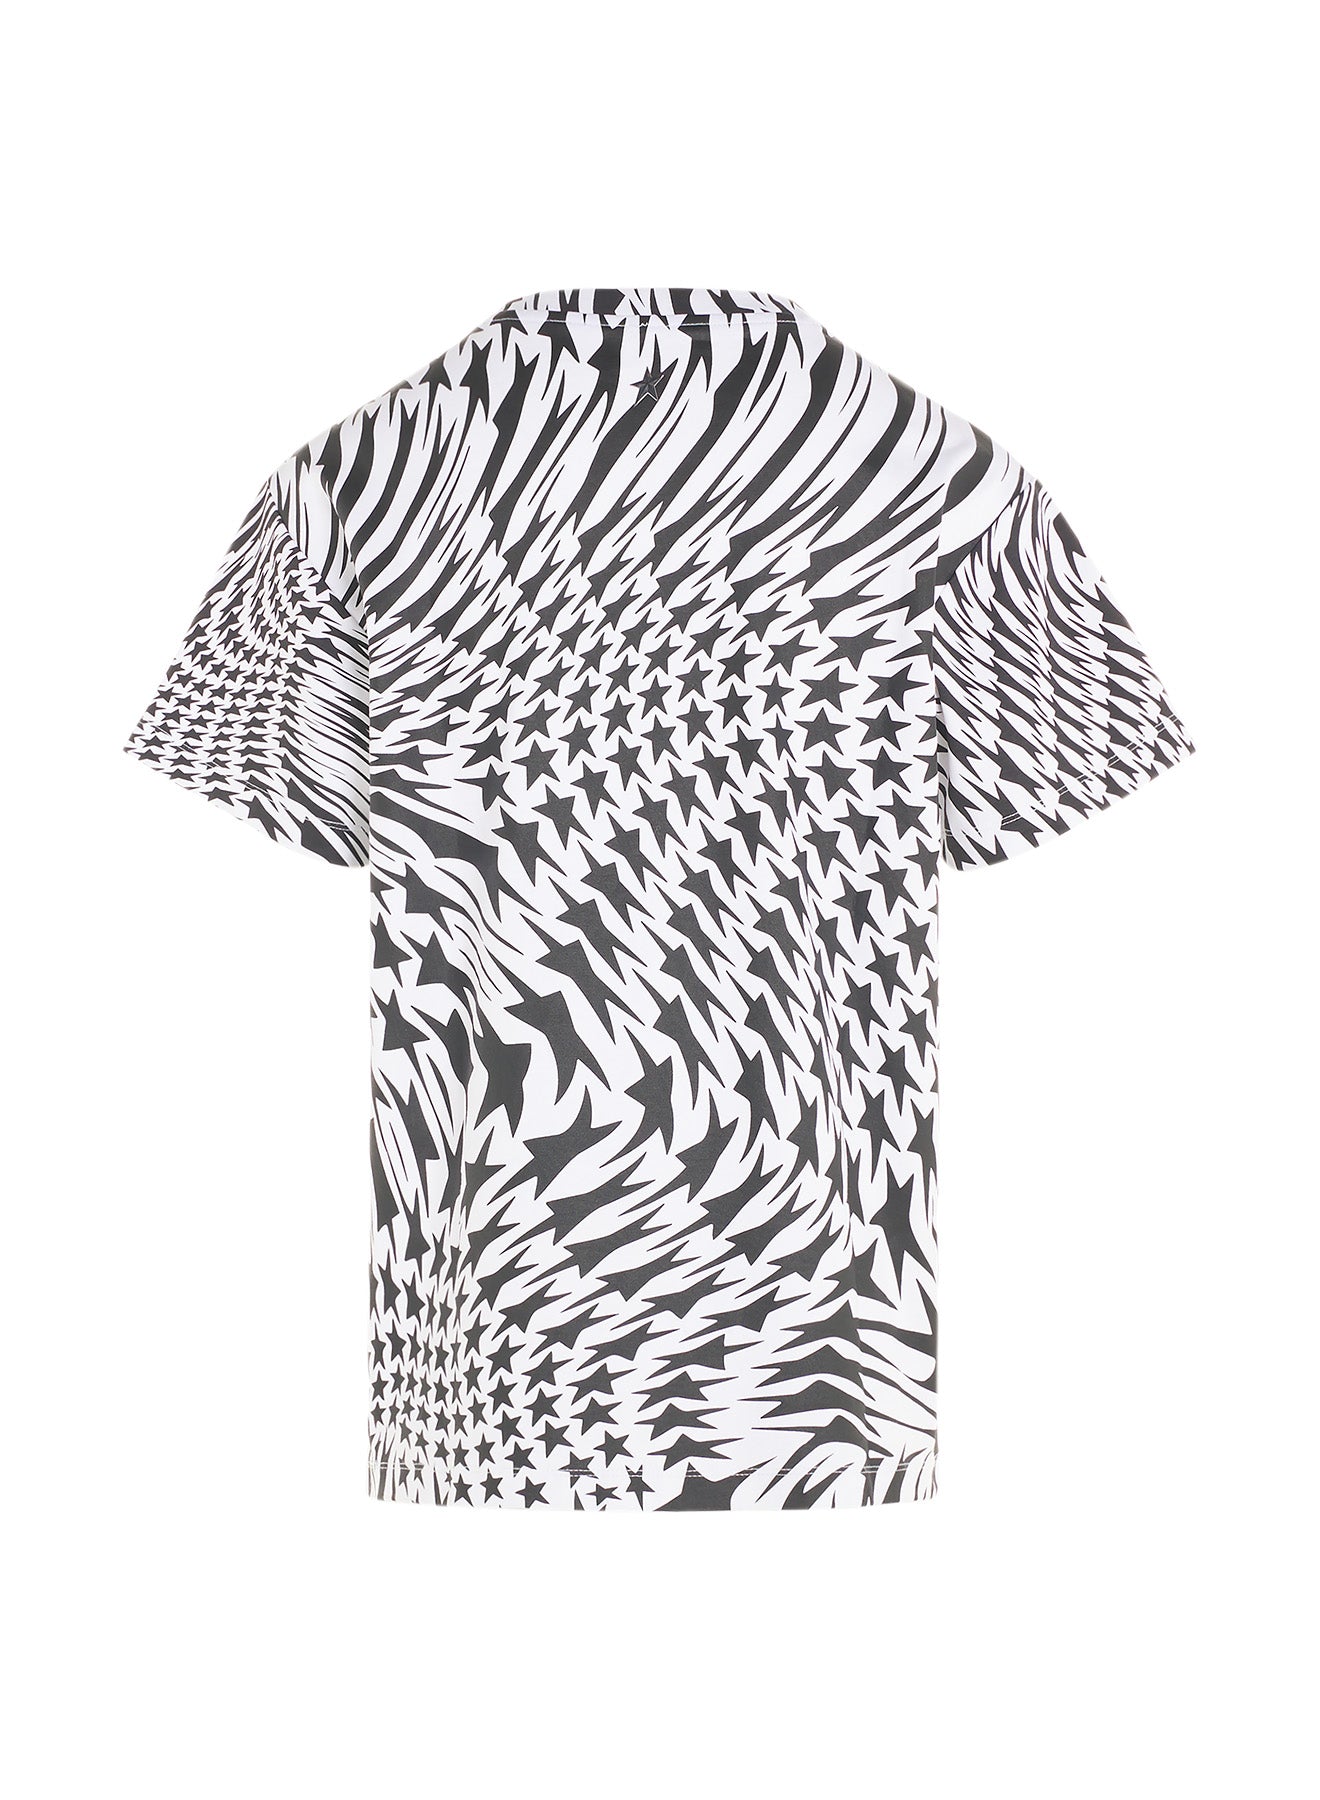 Swirling star printed T-shirt